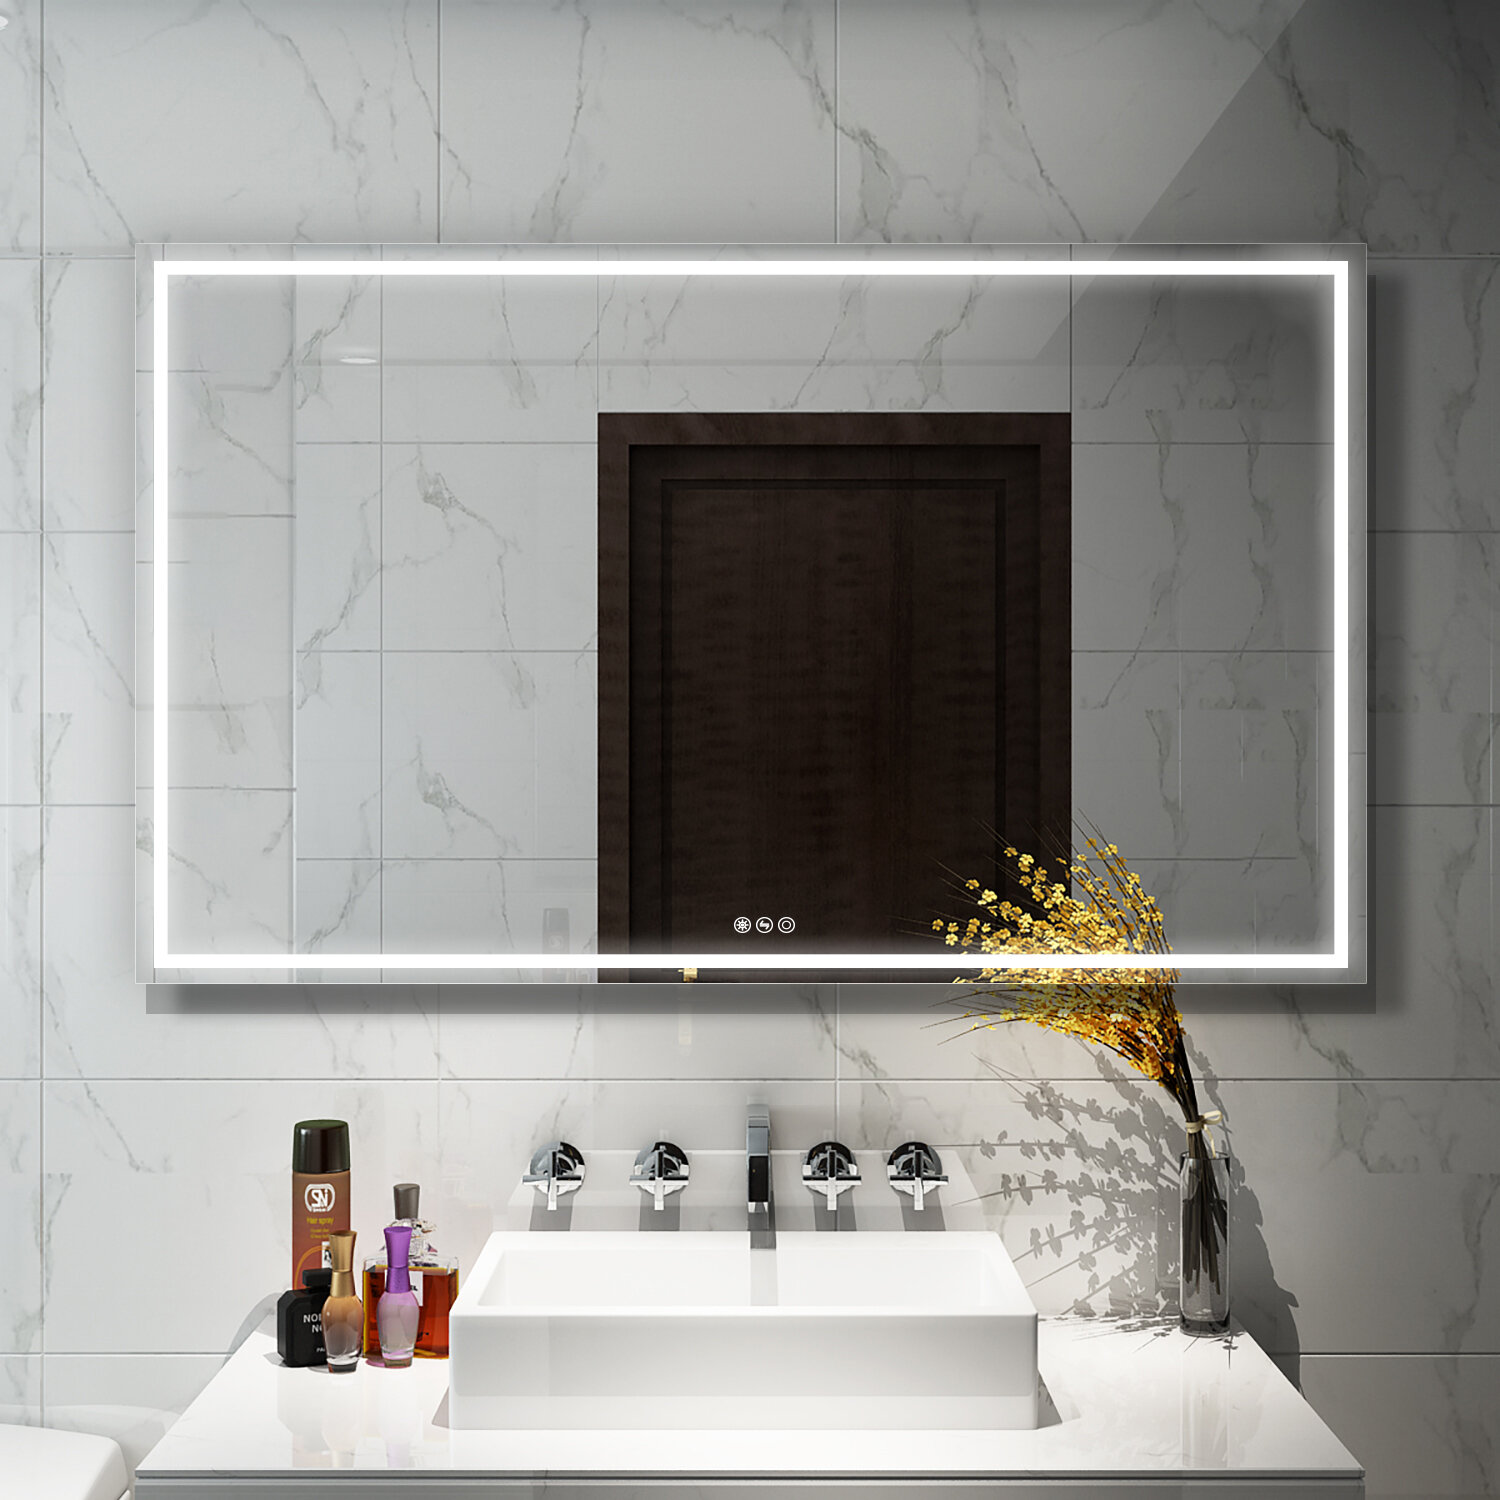 30"x36" LED Illuminated Wall Mount Bathroom Vanity Mirror w/ Motion Touch Sensor